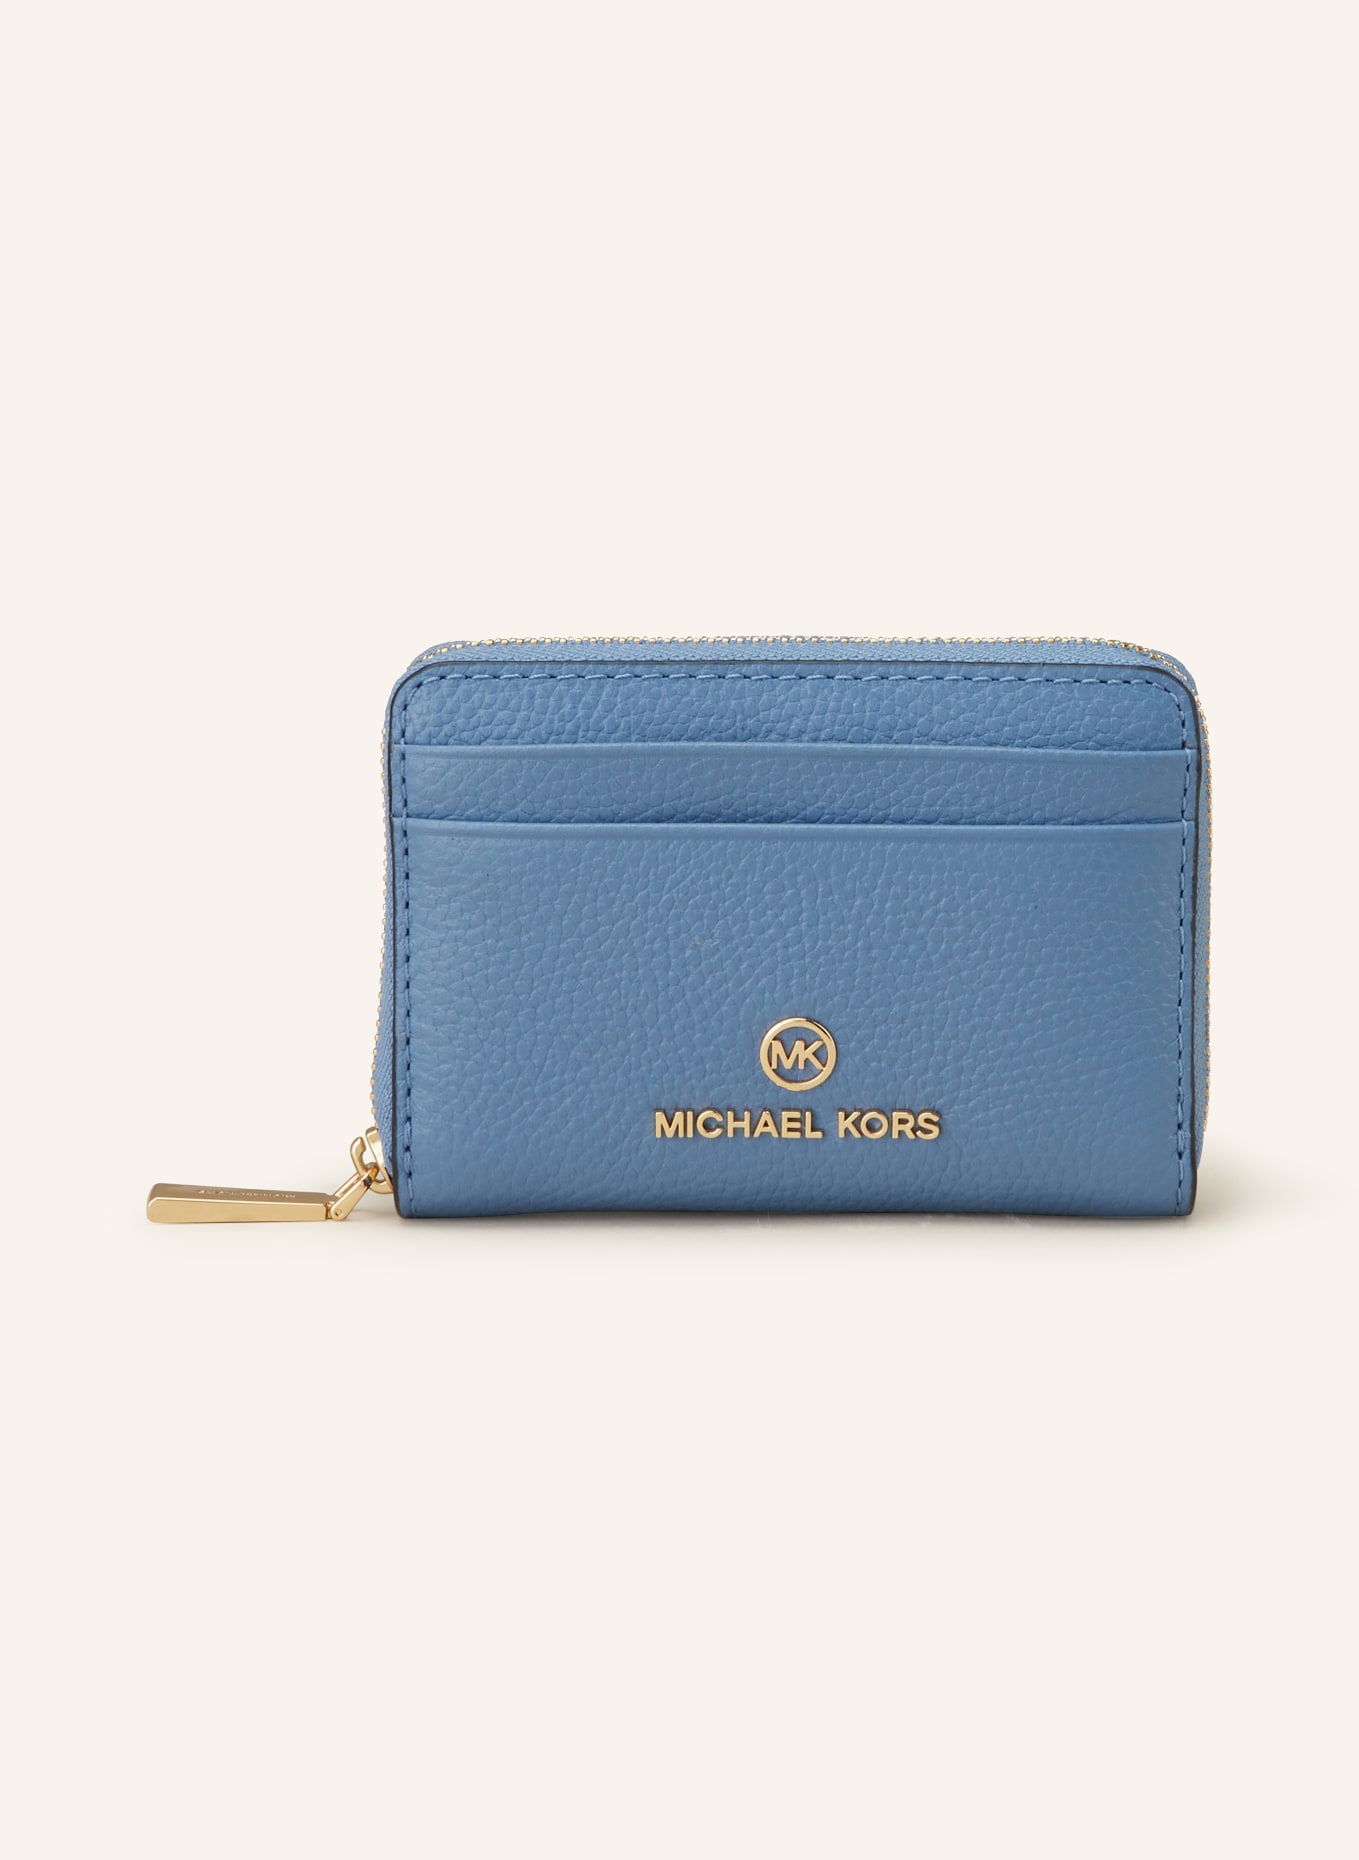 MICHAEL KORS Geldbörse JET SET SMALL, Farbe: 457 FRENCH BLUE (Bild 1)